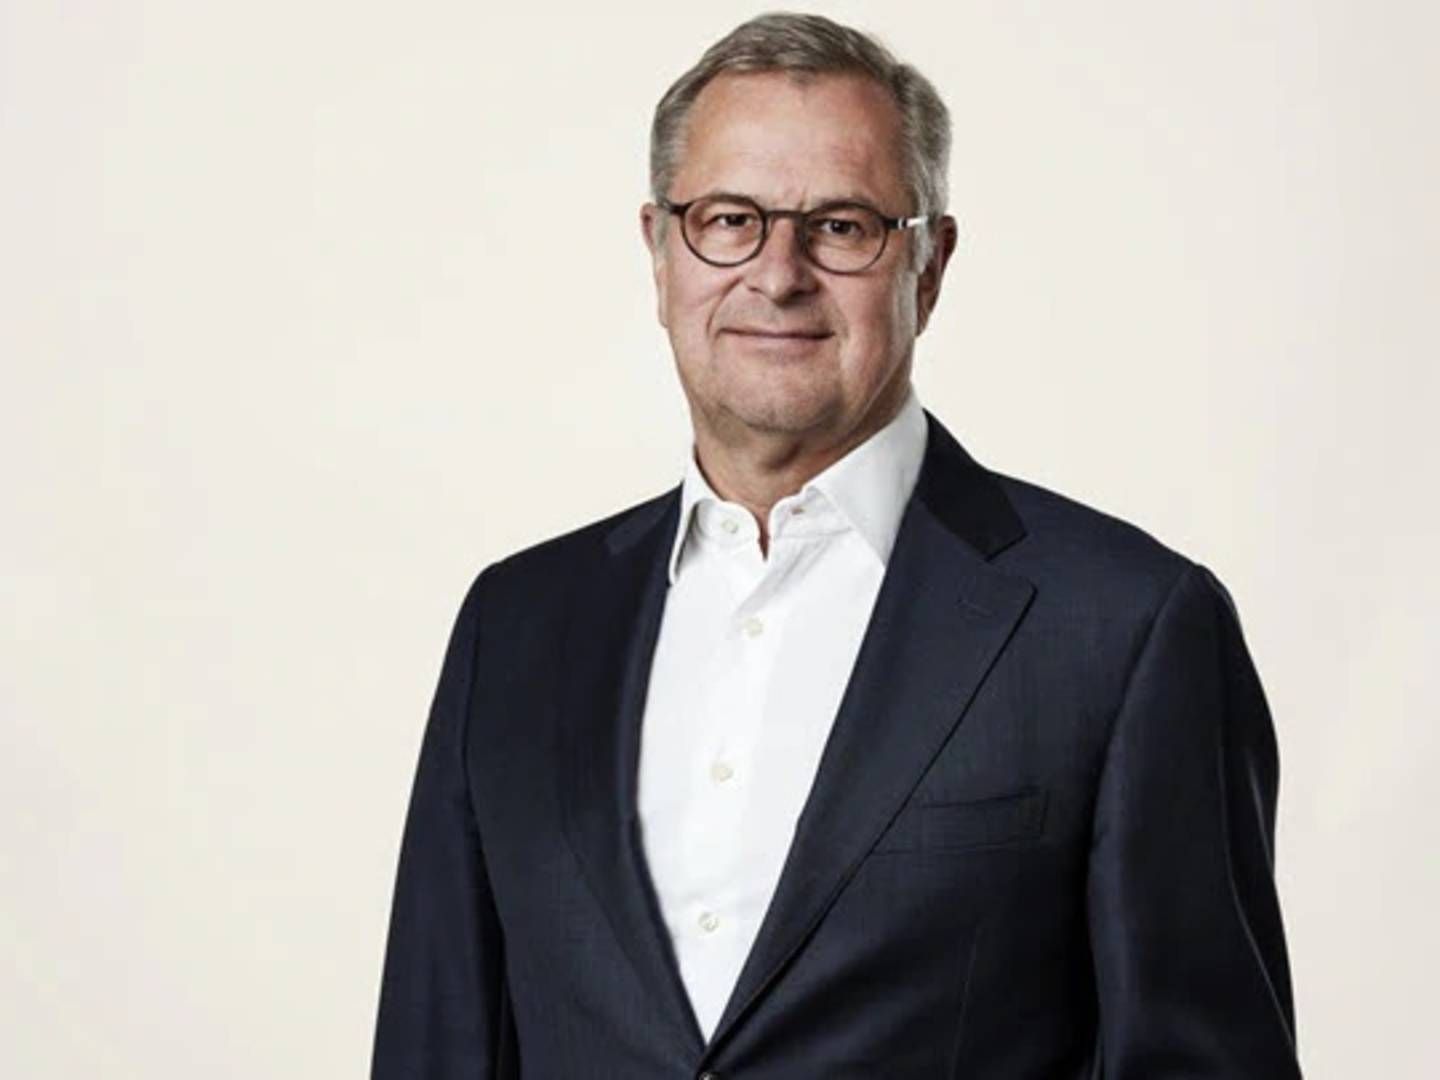 Maersks CEO, Søren Skou. | Photo: PR-FOTO